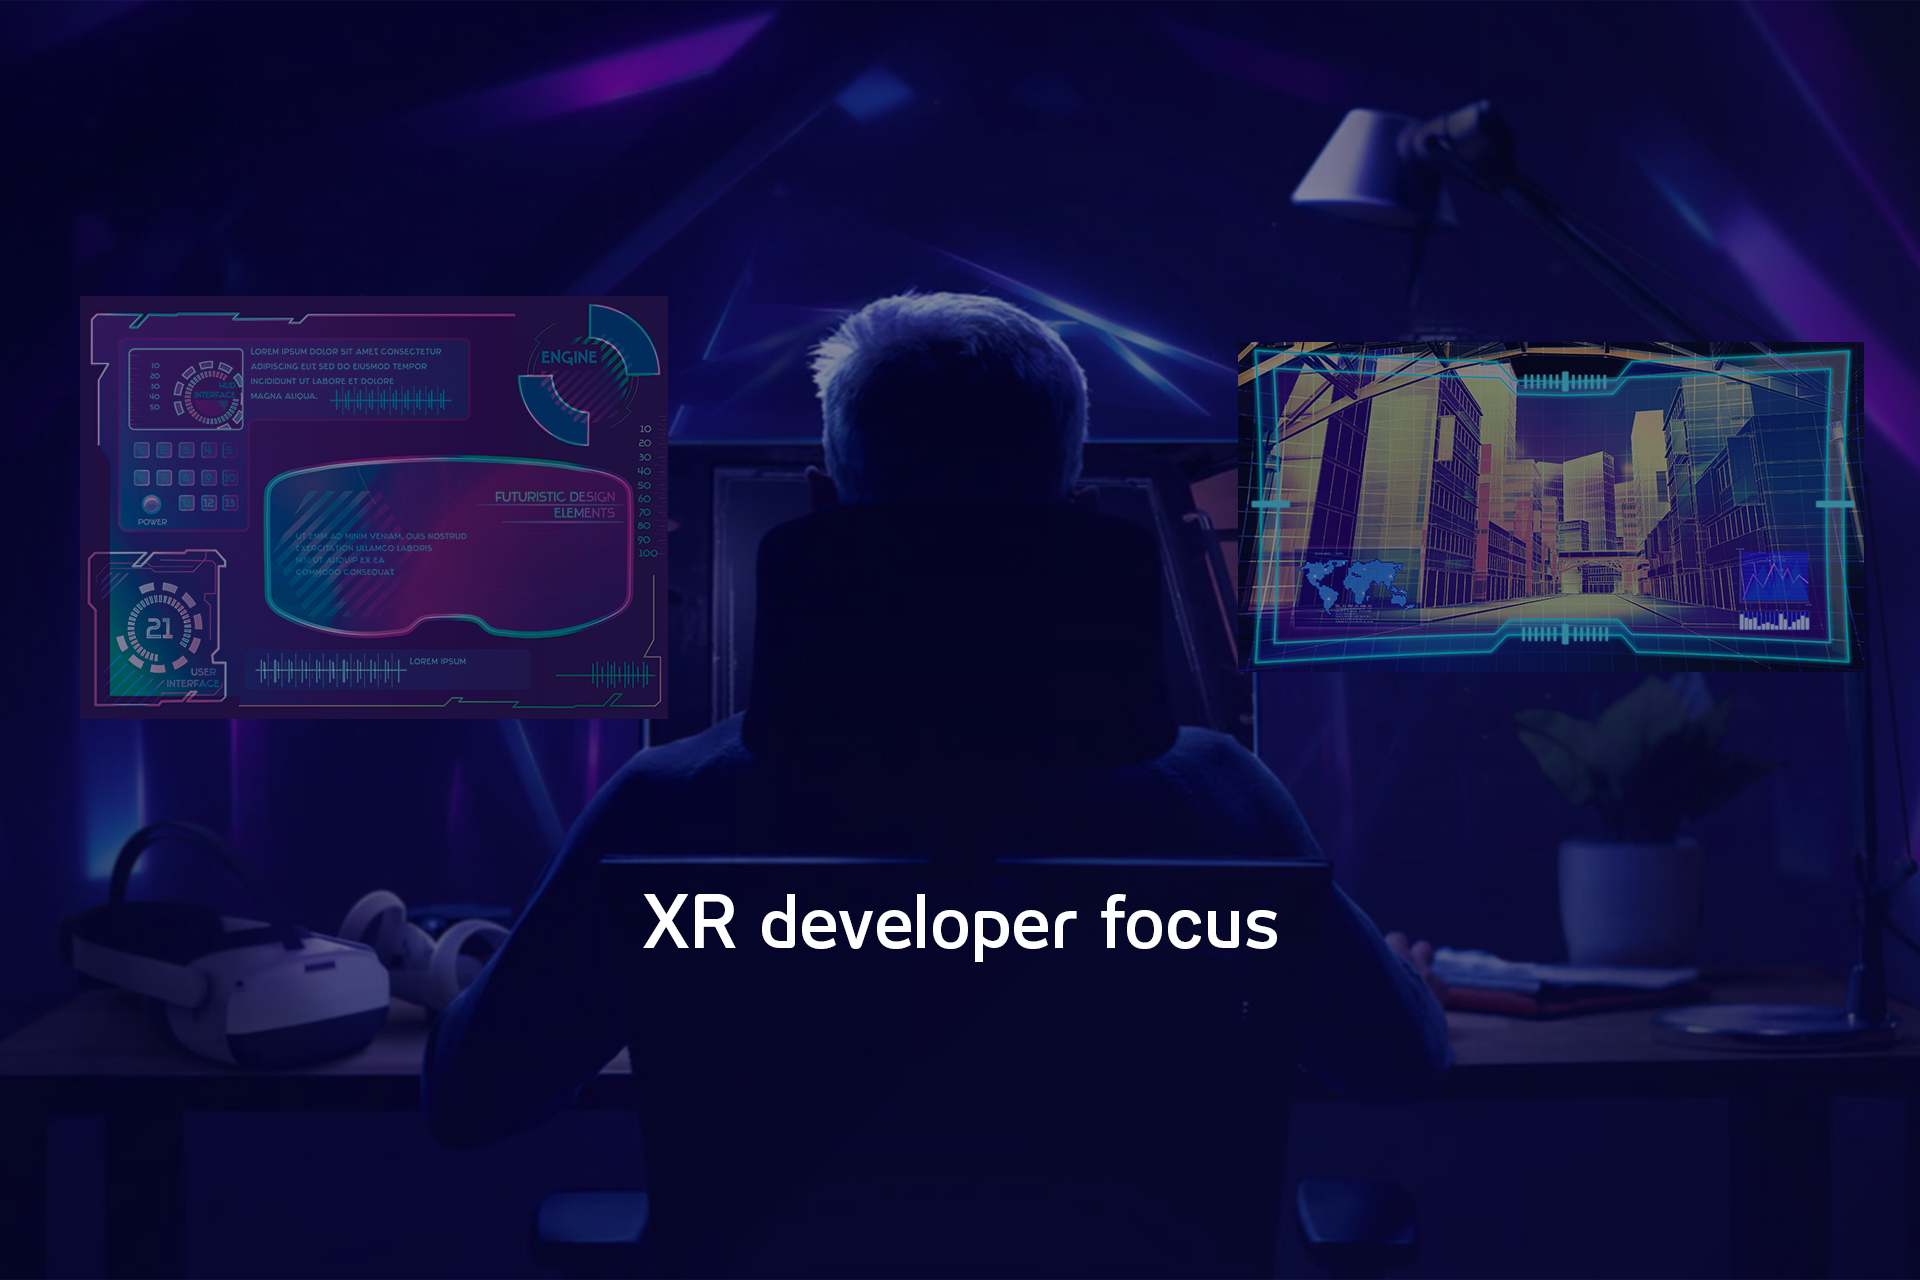 XR developer leveraging eye tracking for next-gen VR headsets